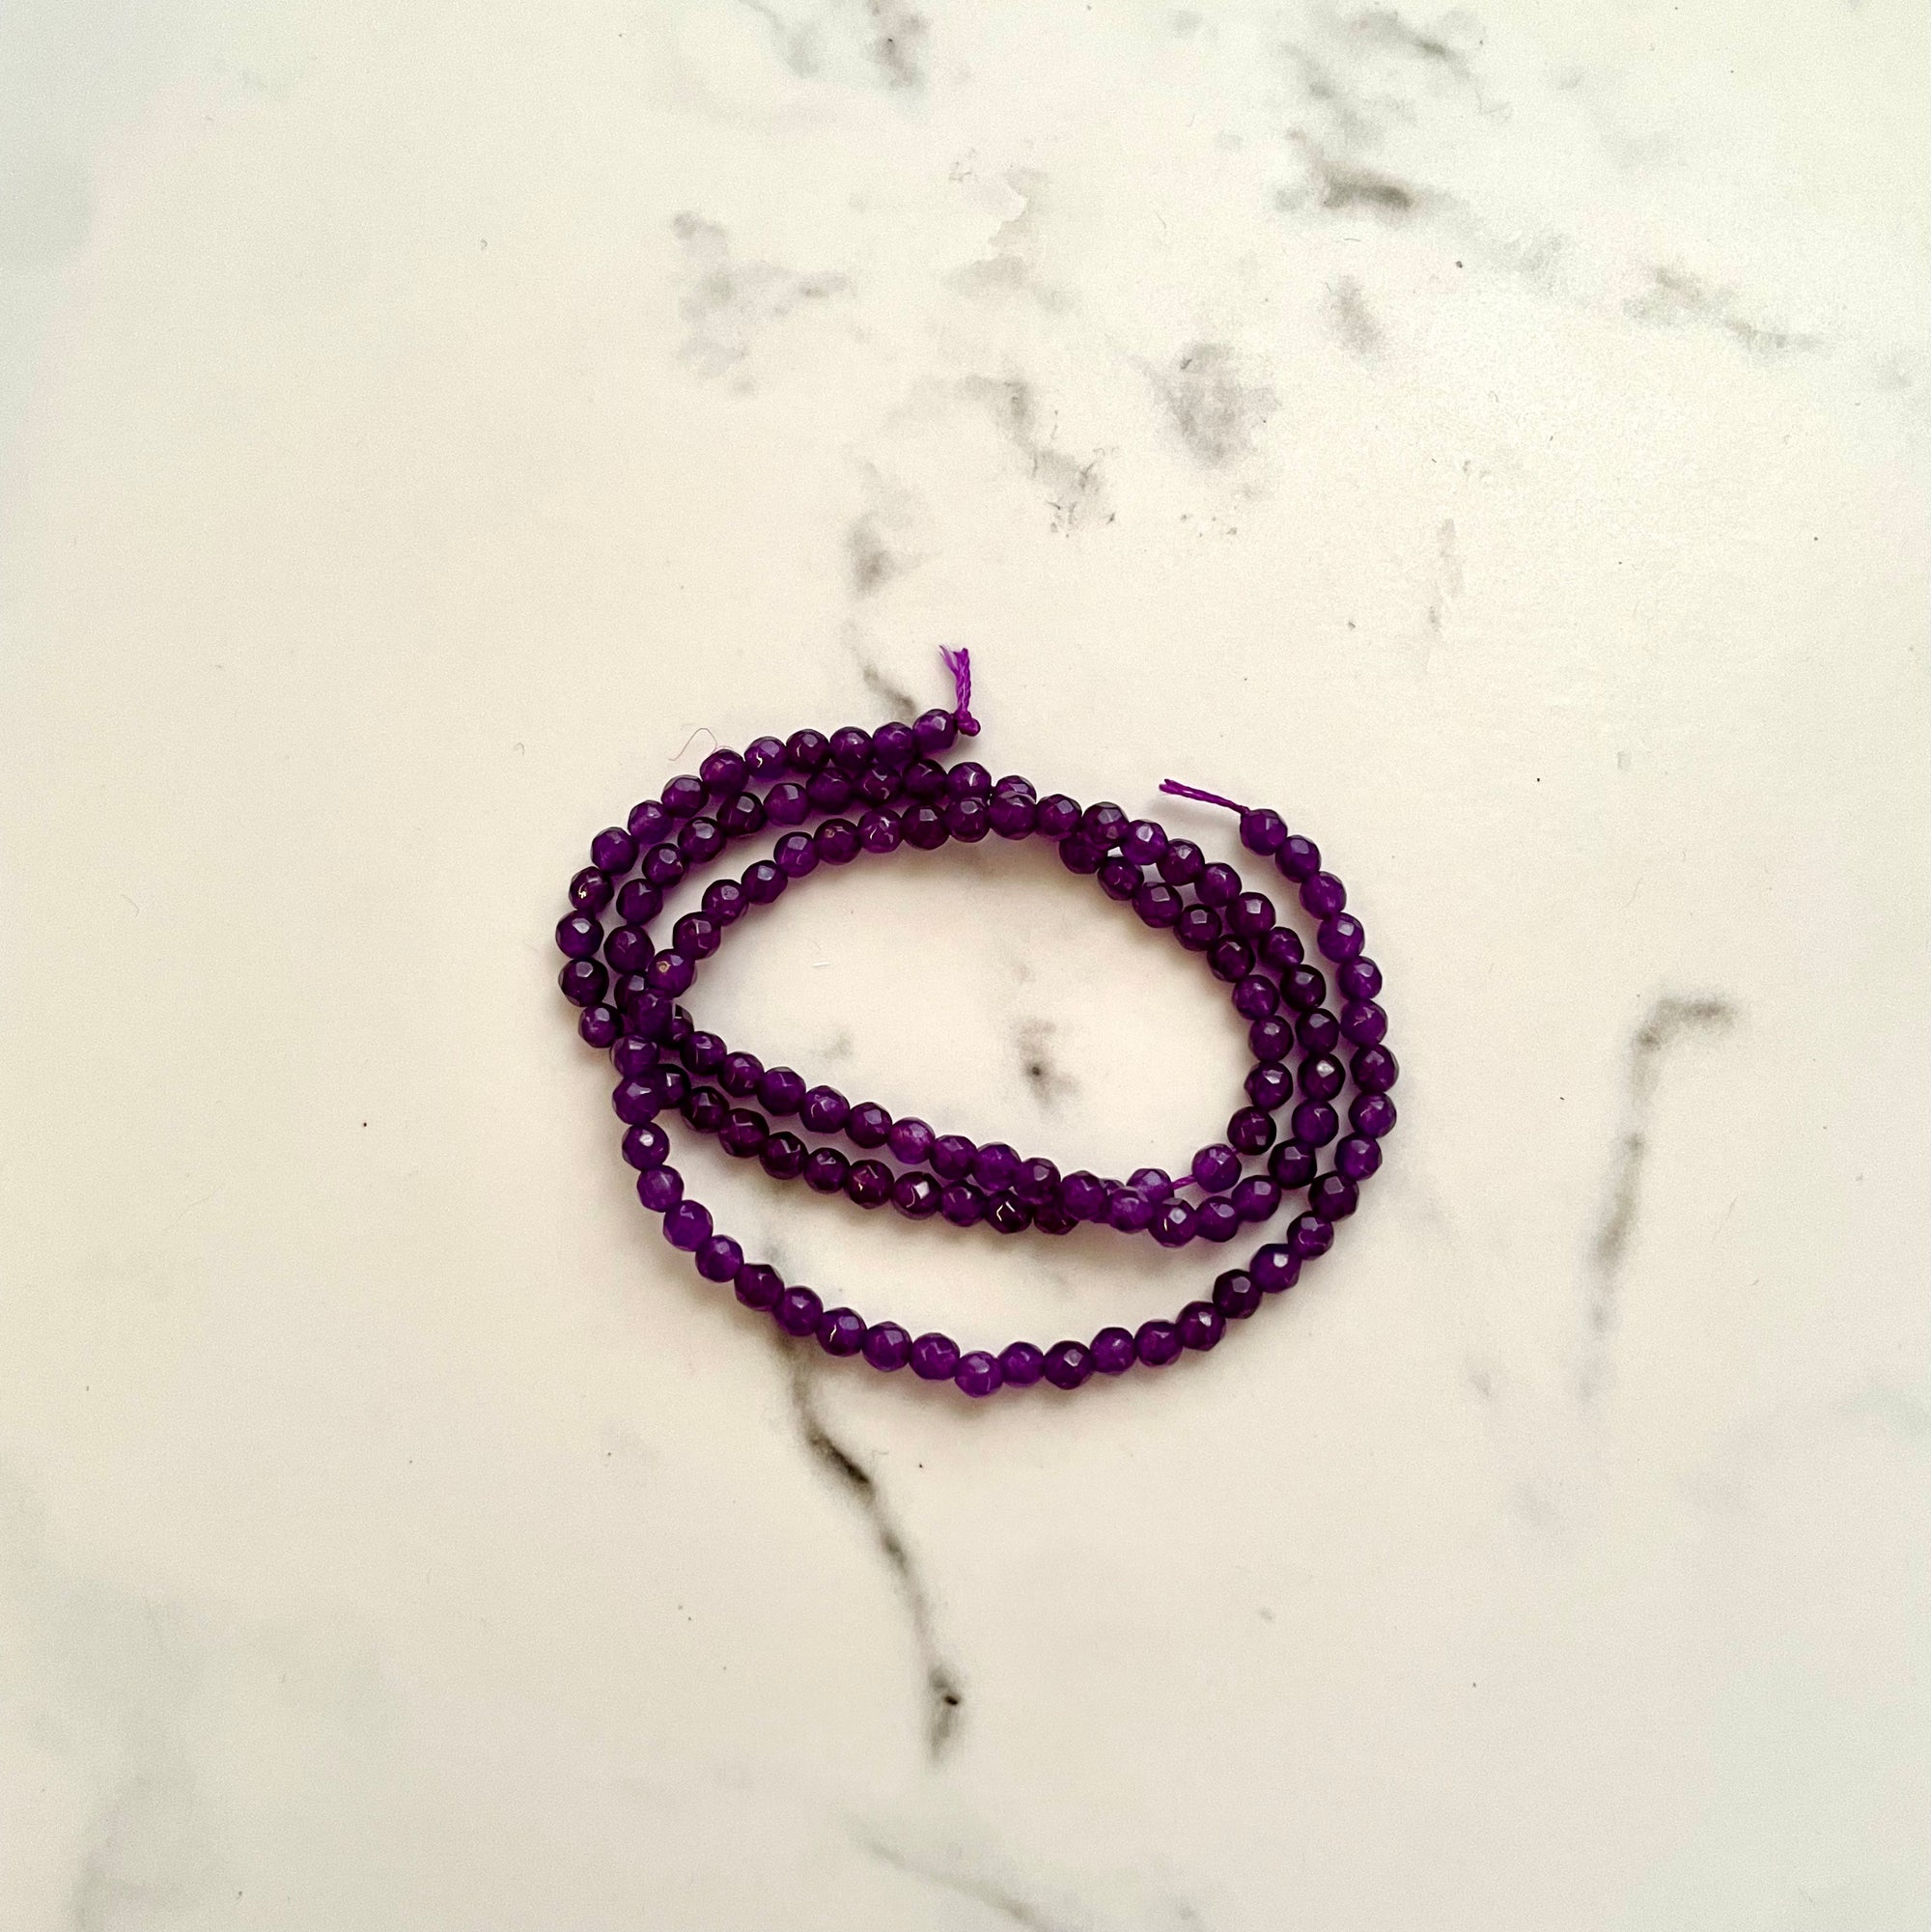 Strung Beads - Pinks, Reds & Purples